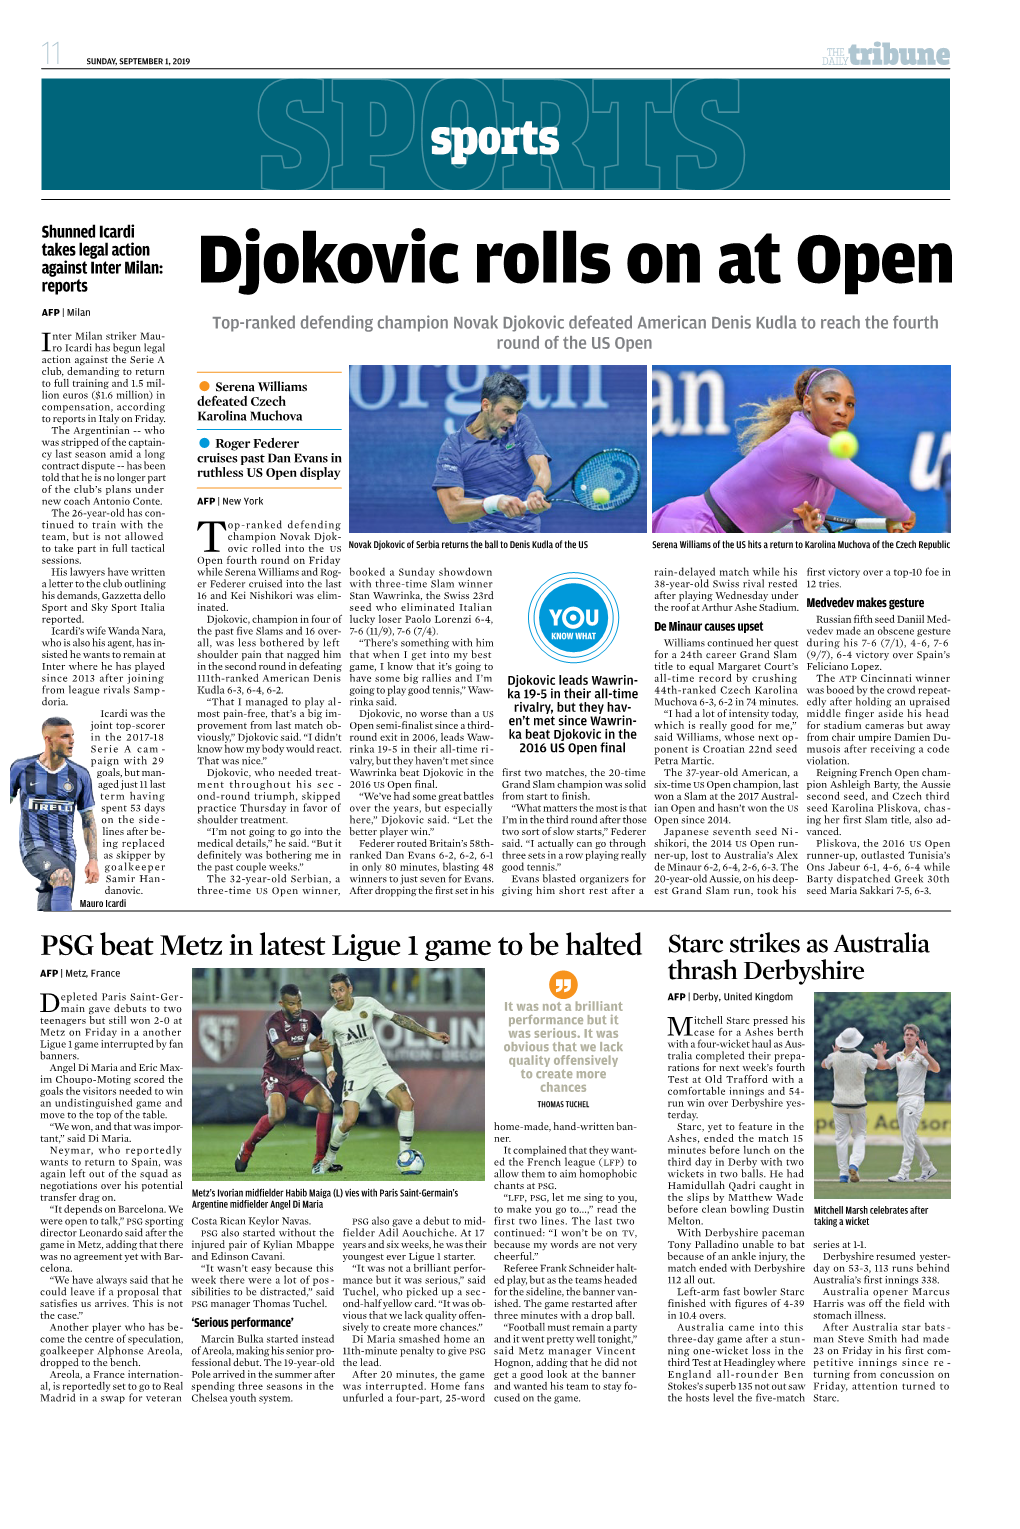 Djokovic Rolls on at Open